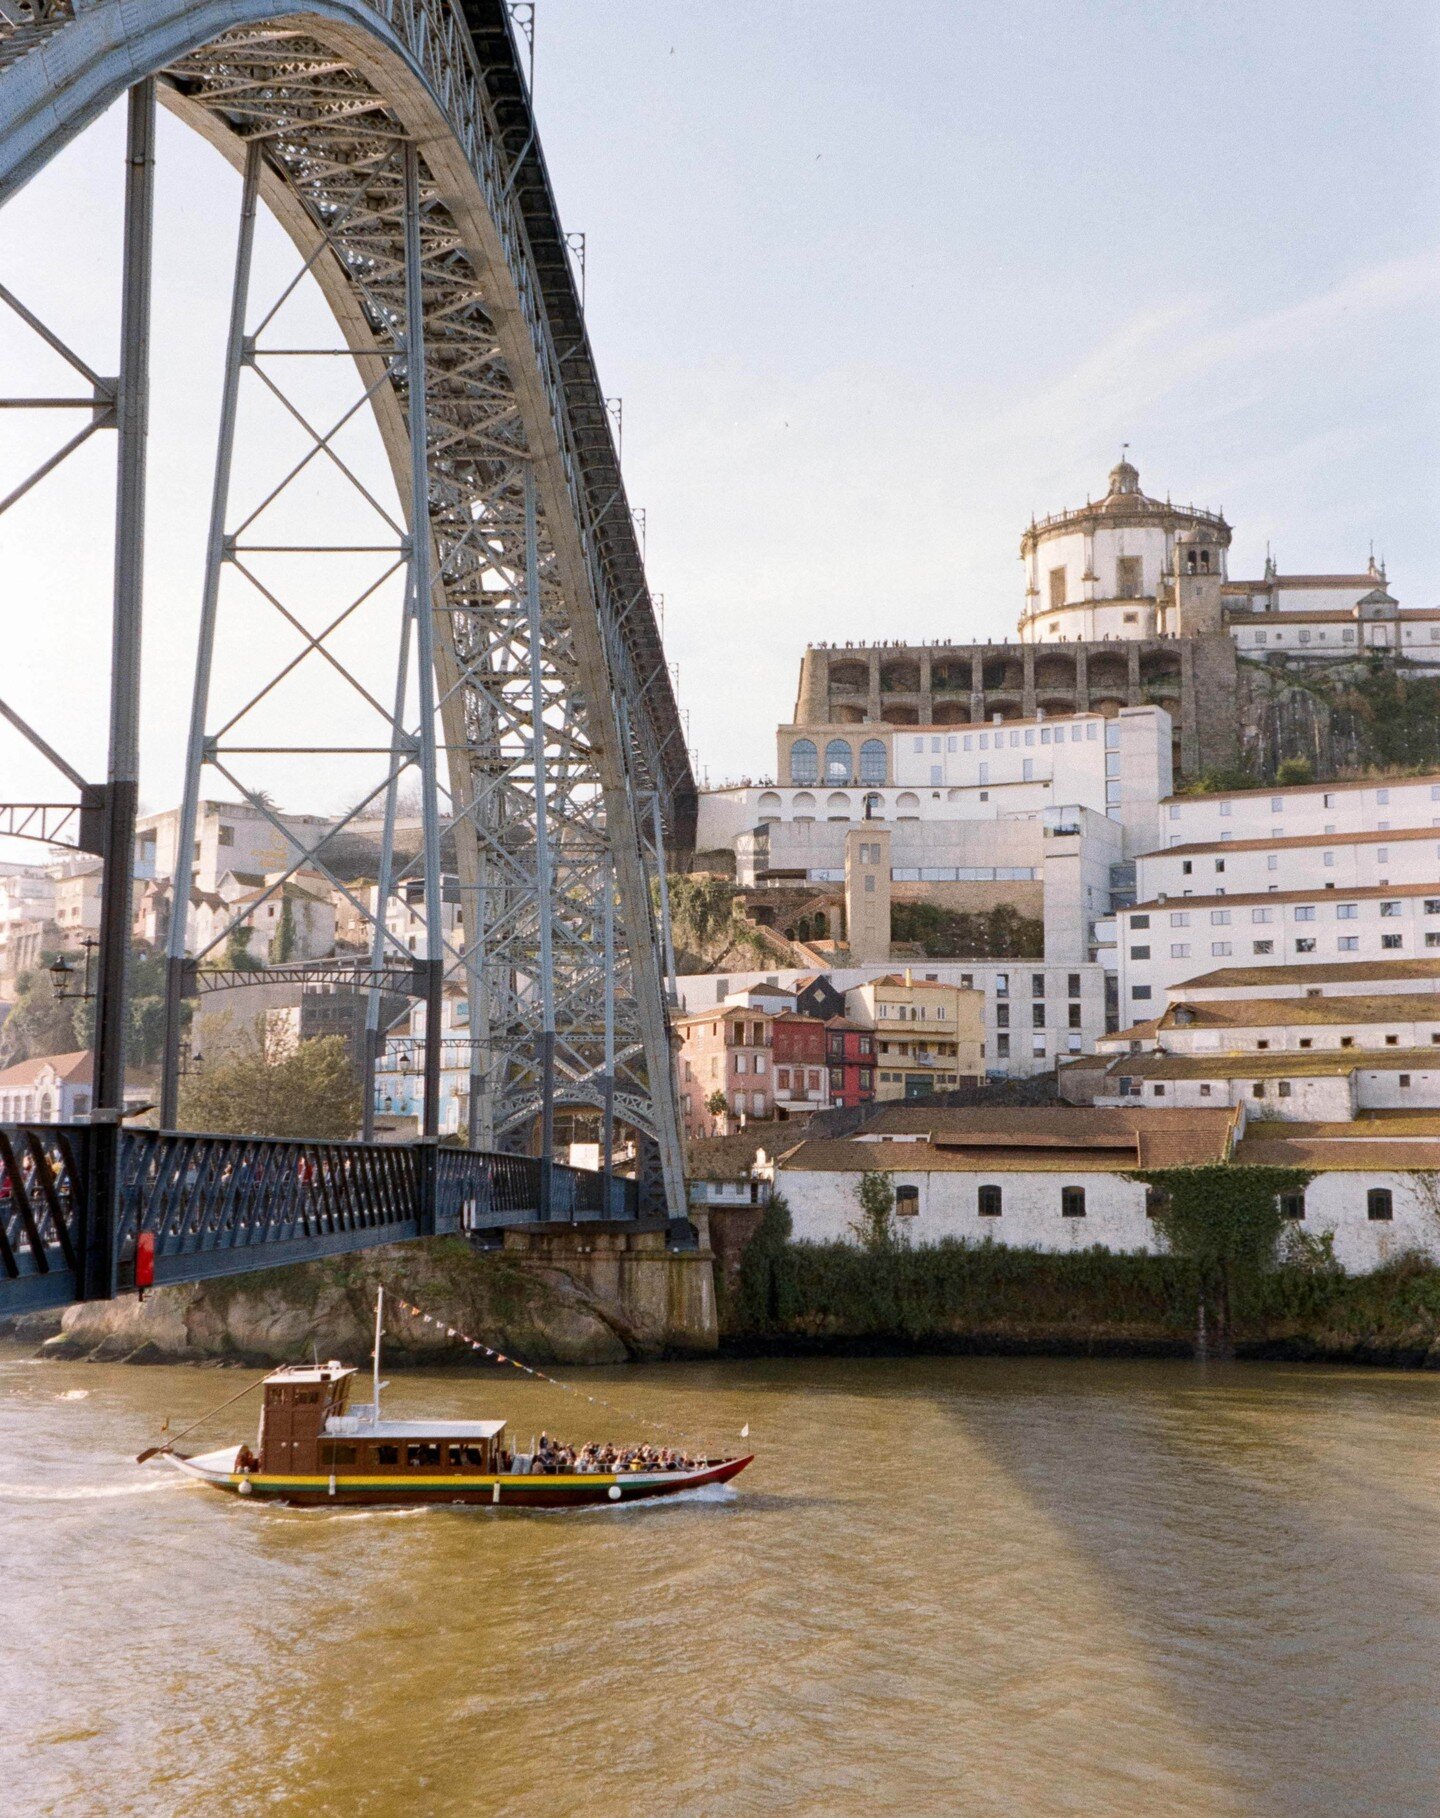 Golden tones of Porto 🎞✨
.
.
#summitvintageco #35mm #pointandshoot #filmphotography #nikon #canon #fuji #kodak